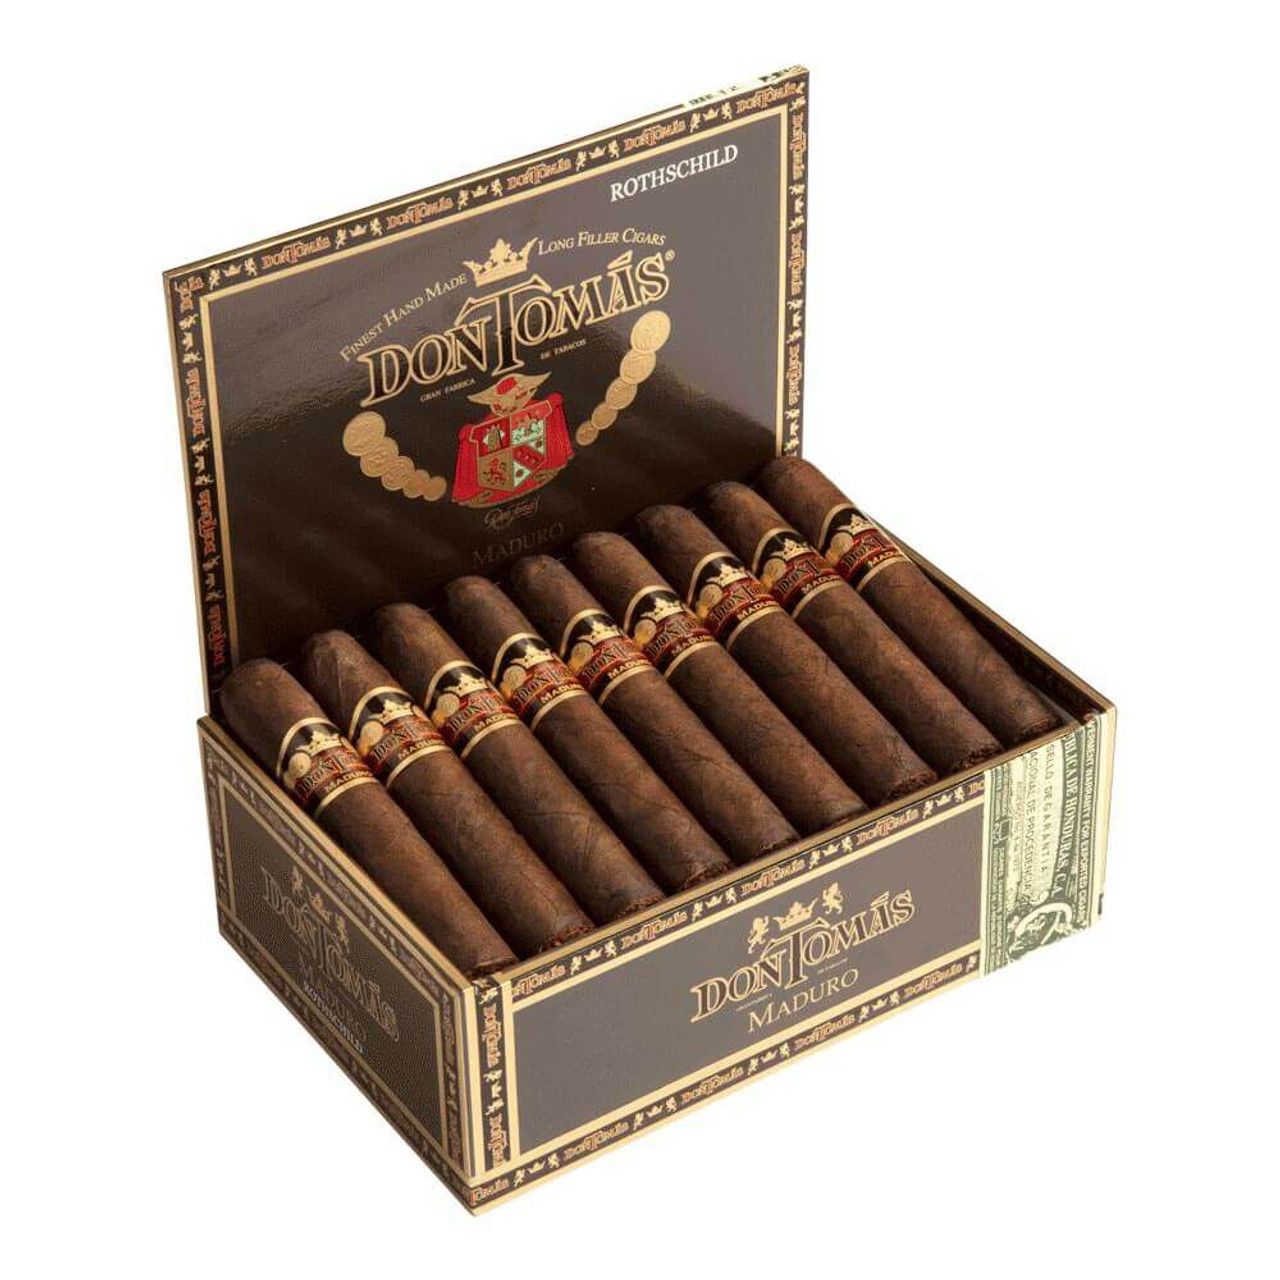 Don Tomas Clasico Rothschild Maduro Cigars - 4.5 x 50 (Box of 25) Open